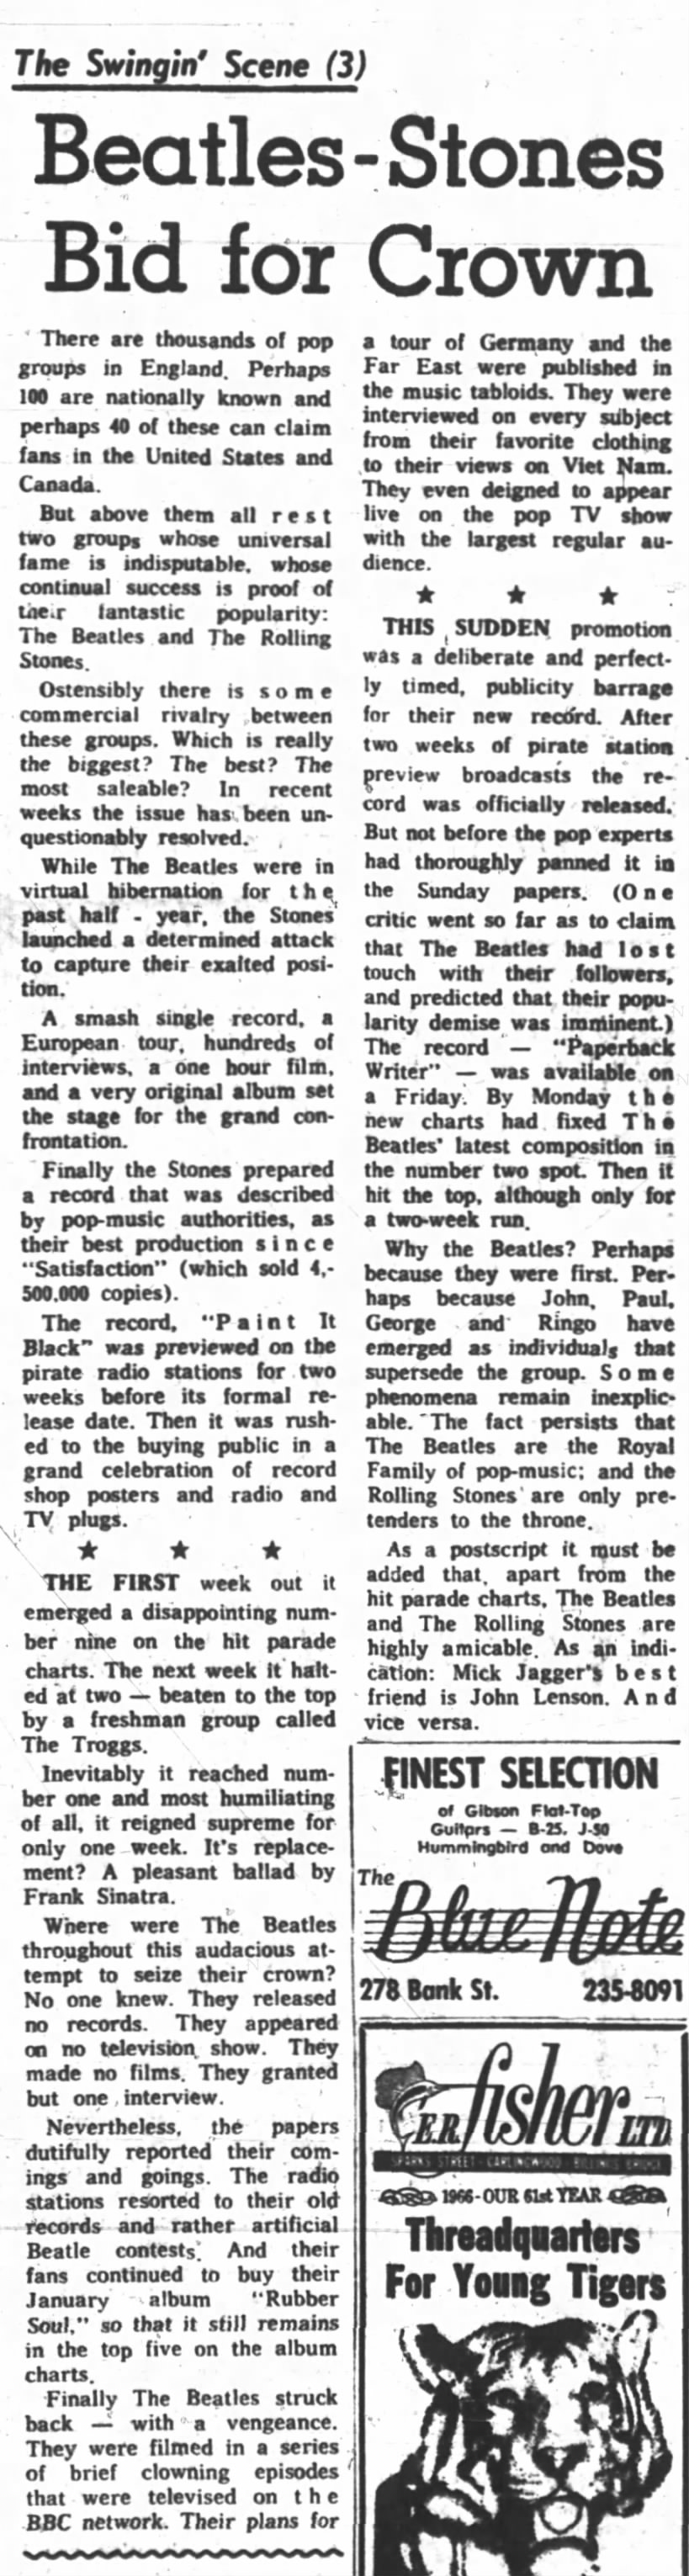 Ottawa Journal - August 6 1966 - page 48 - Beatles Stones bid for Crown